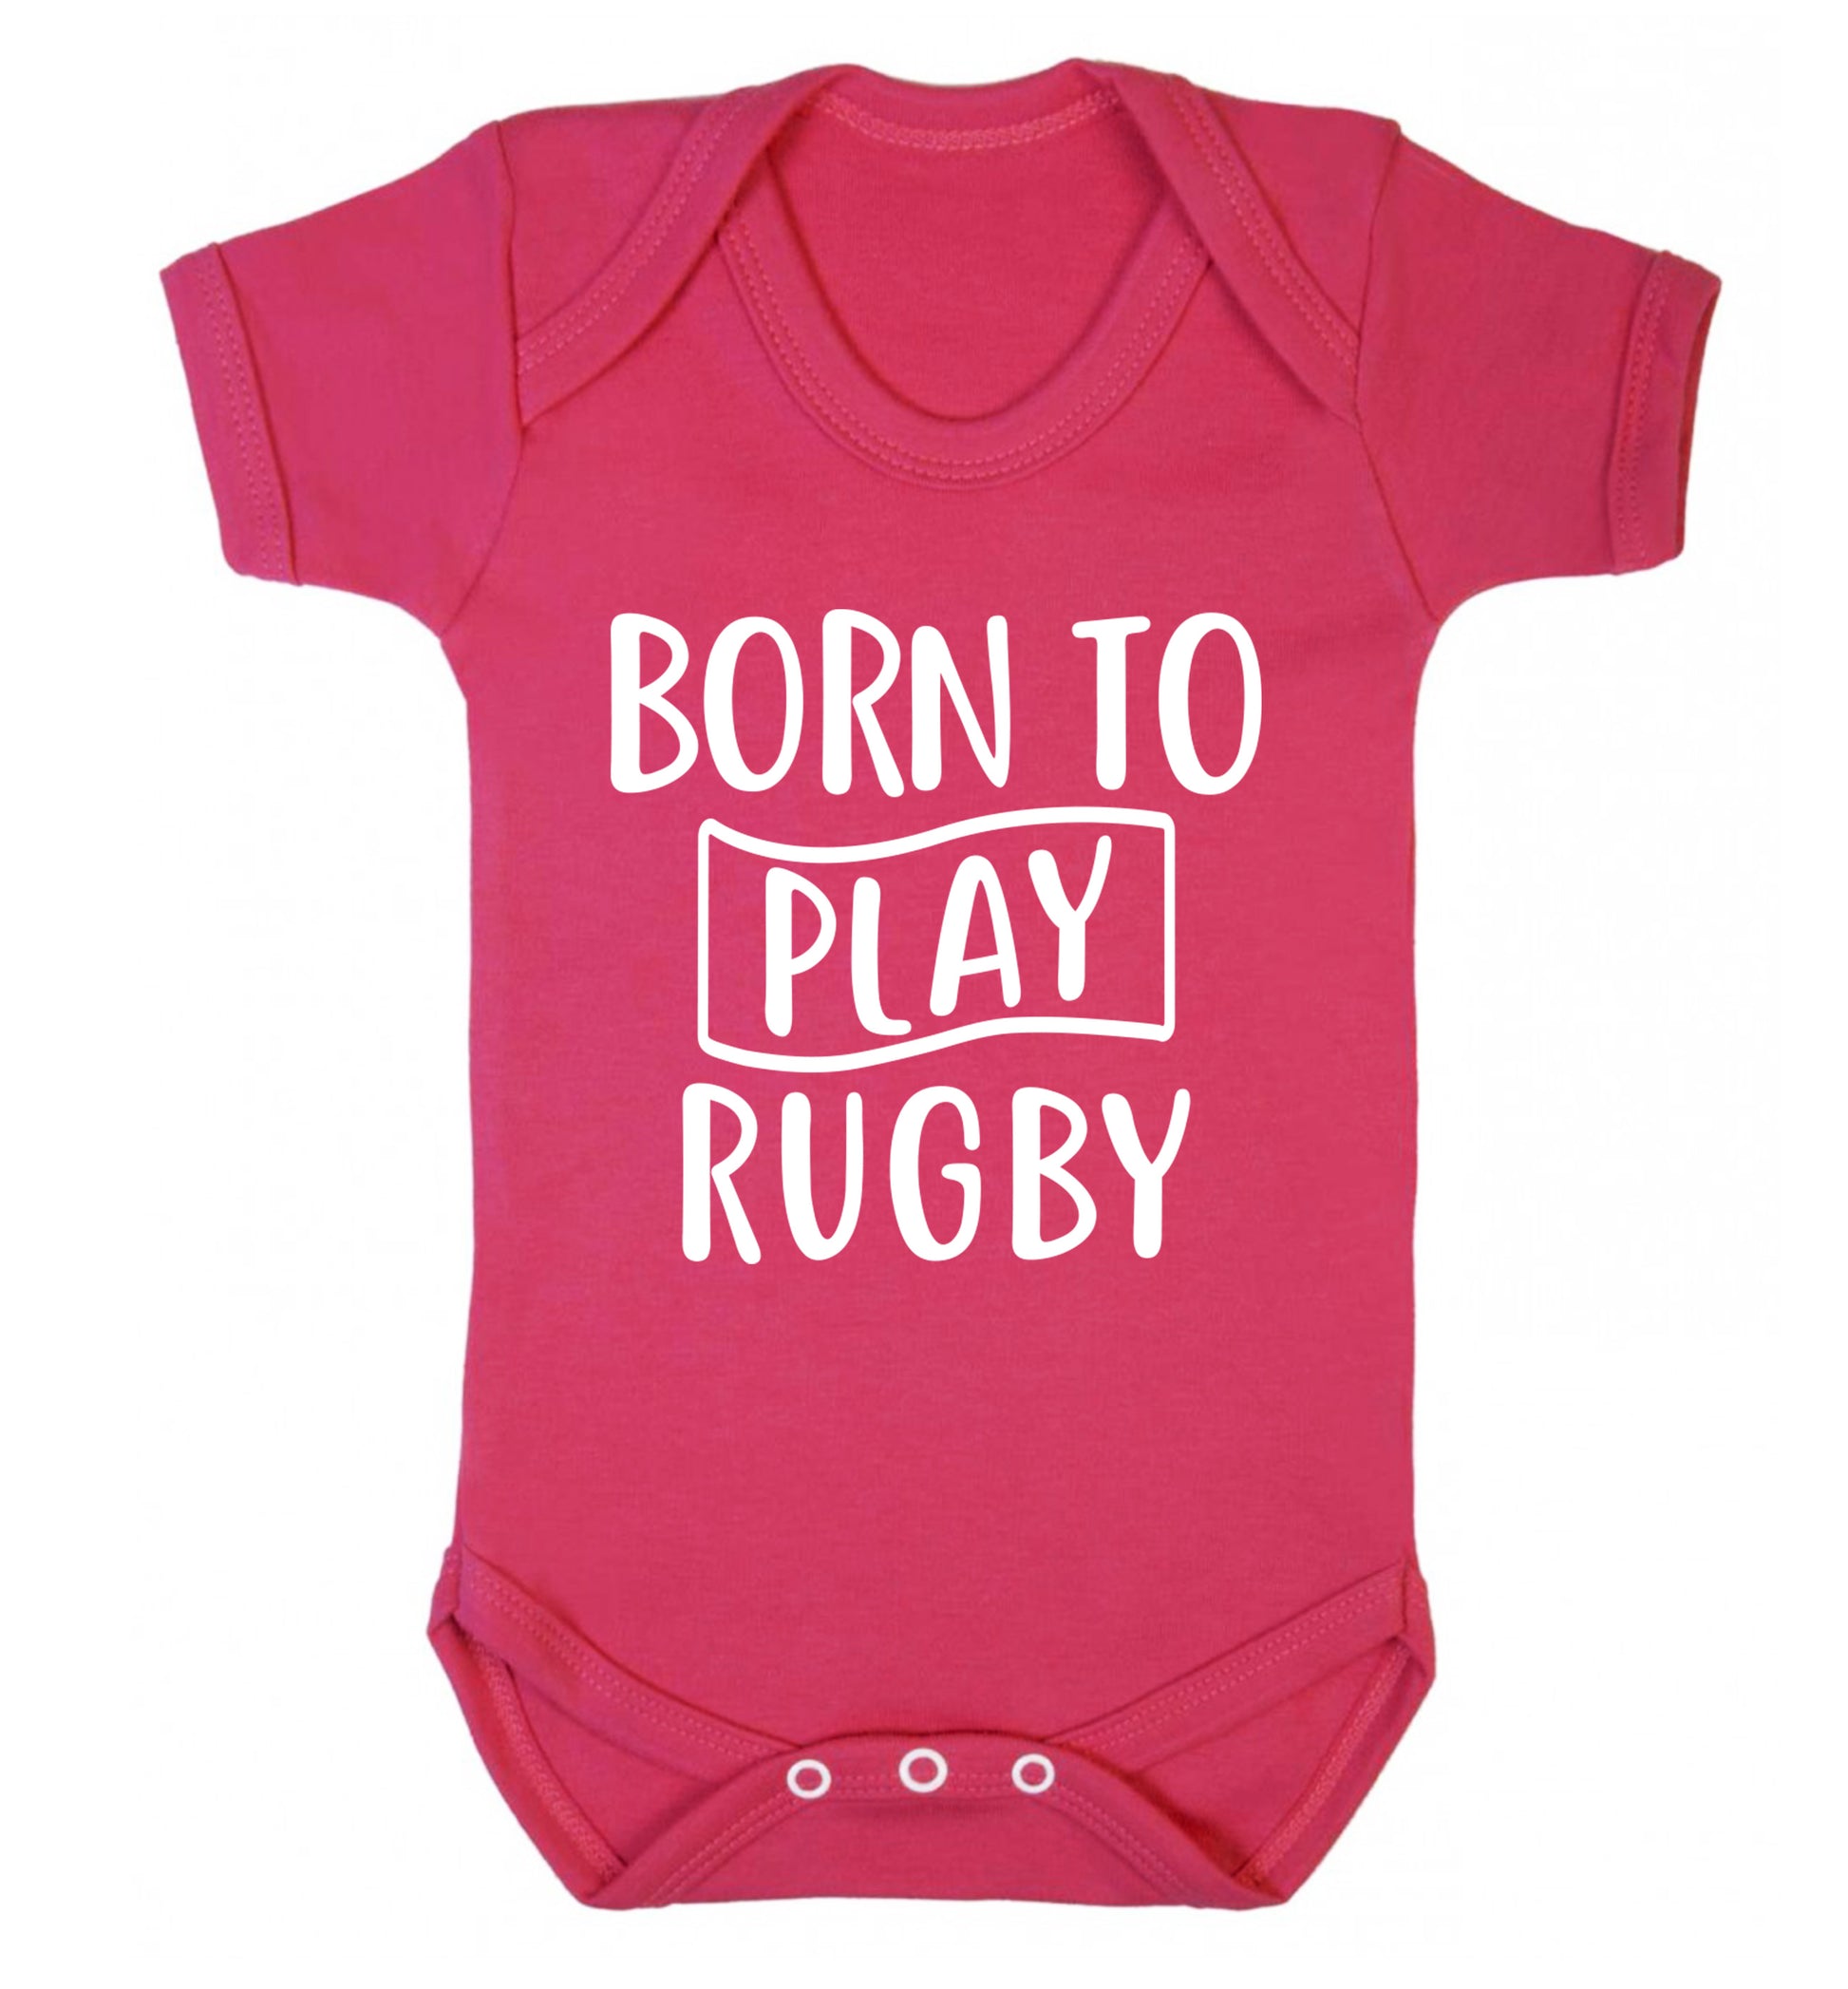 Born to play rugby Baby Vest dark pink 18-24 months